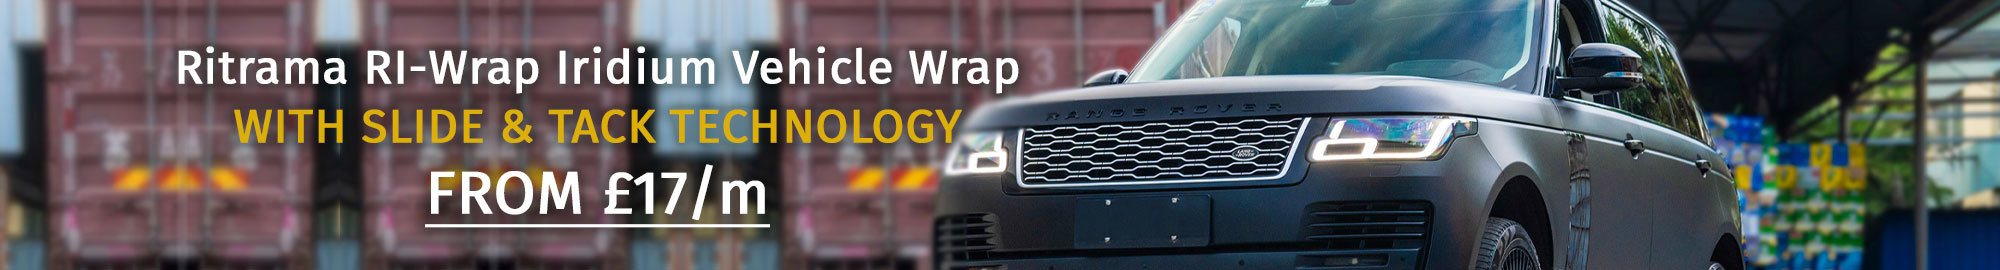 Victory Design - Ritrama Ri-Wrap Iridium Vehicle Wrapping Film